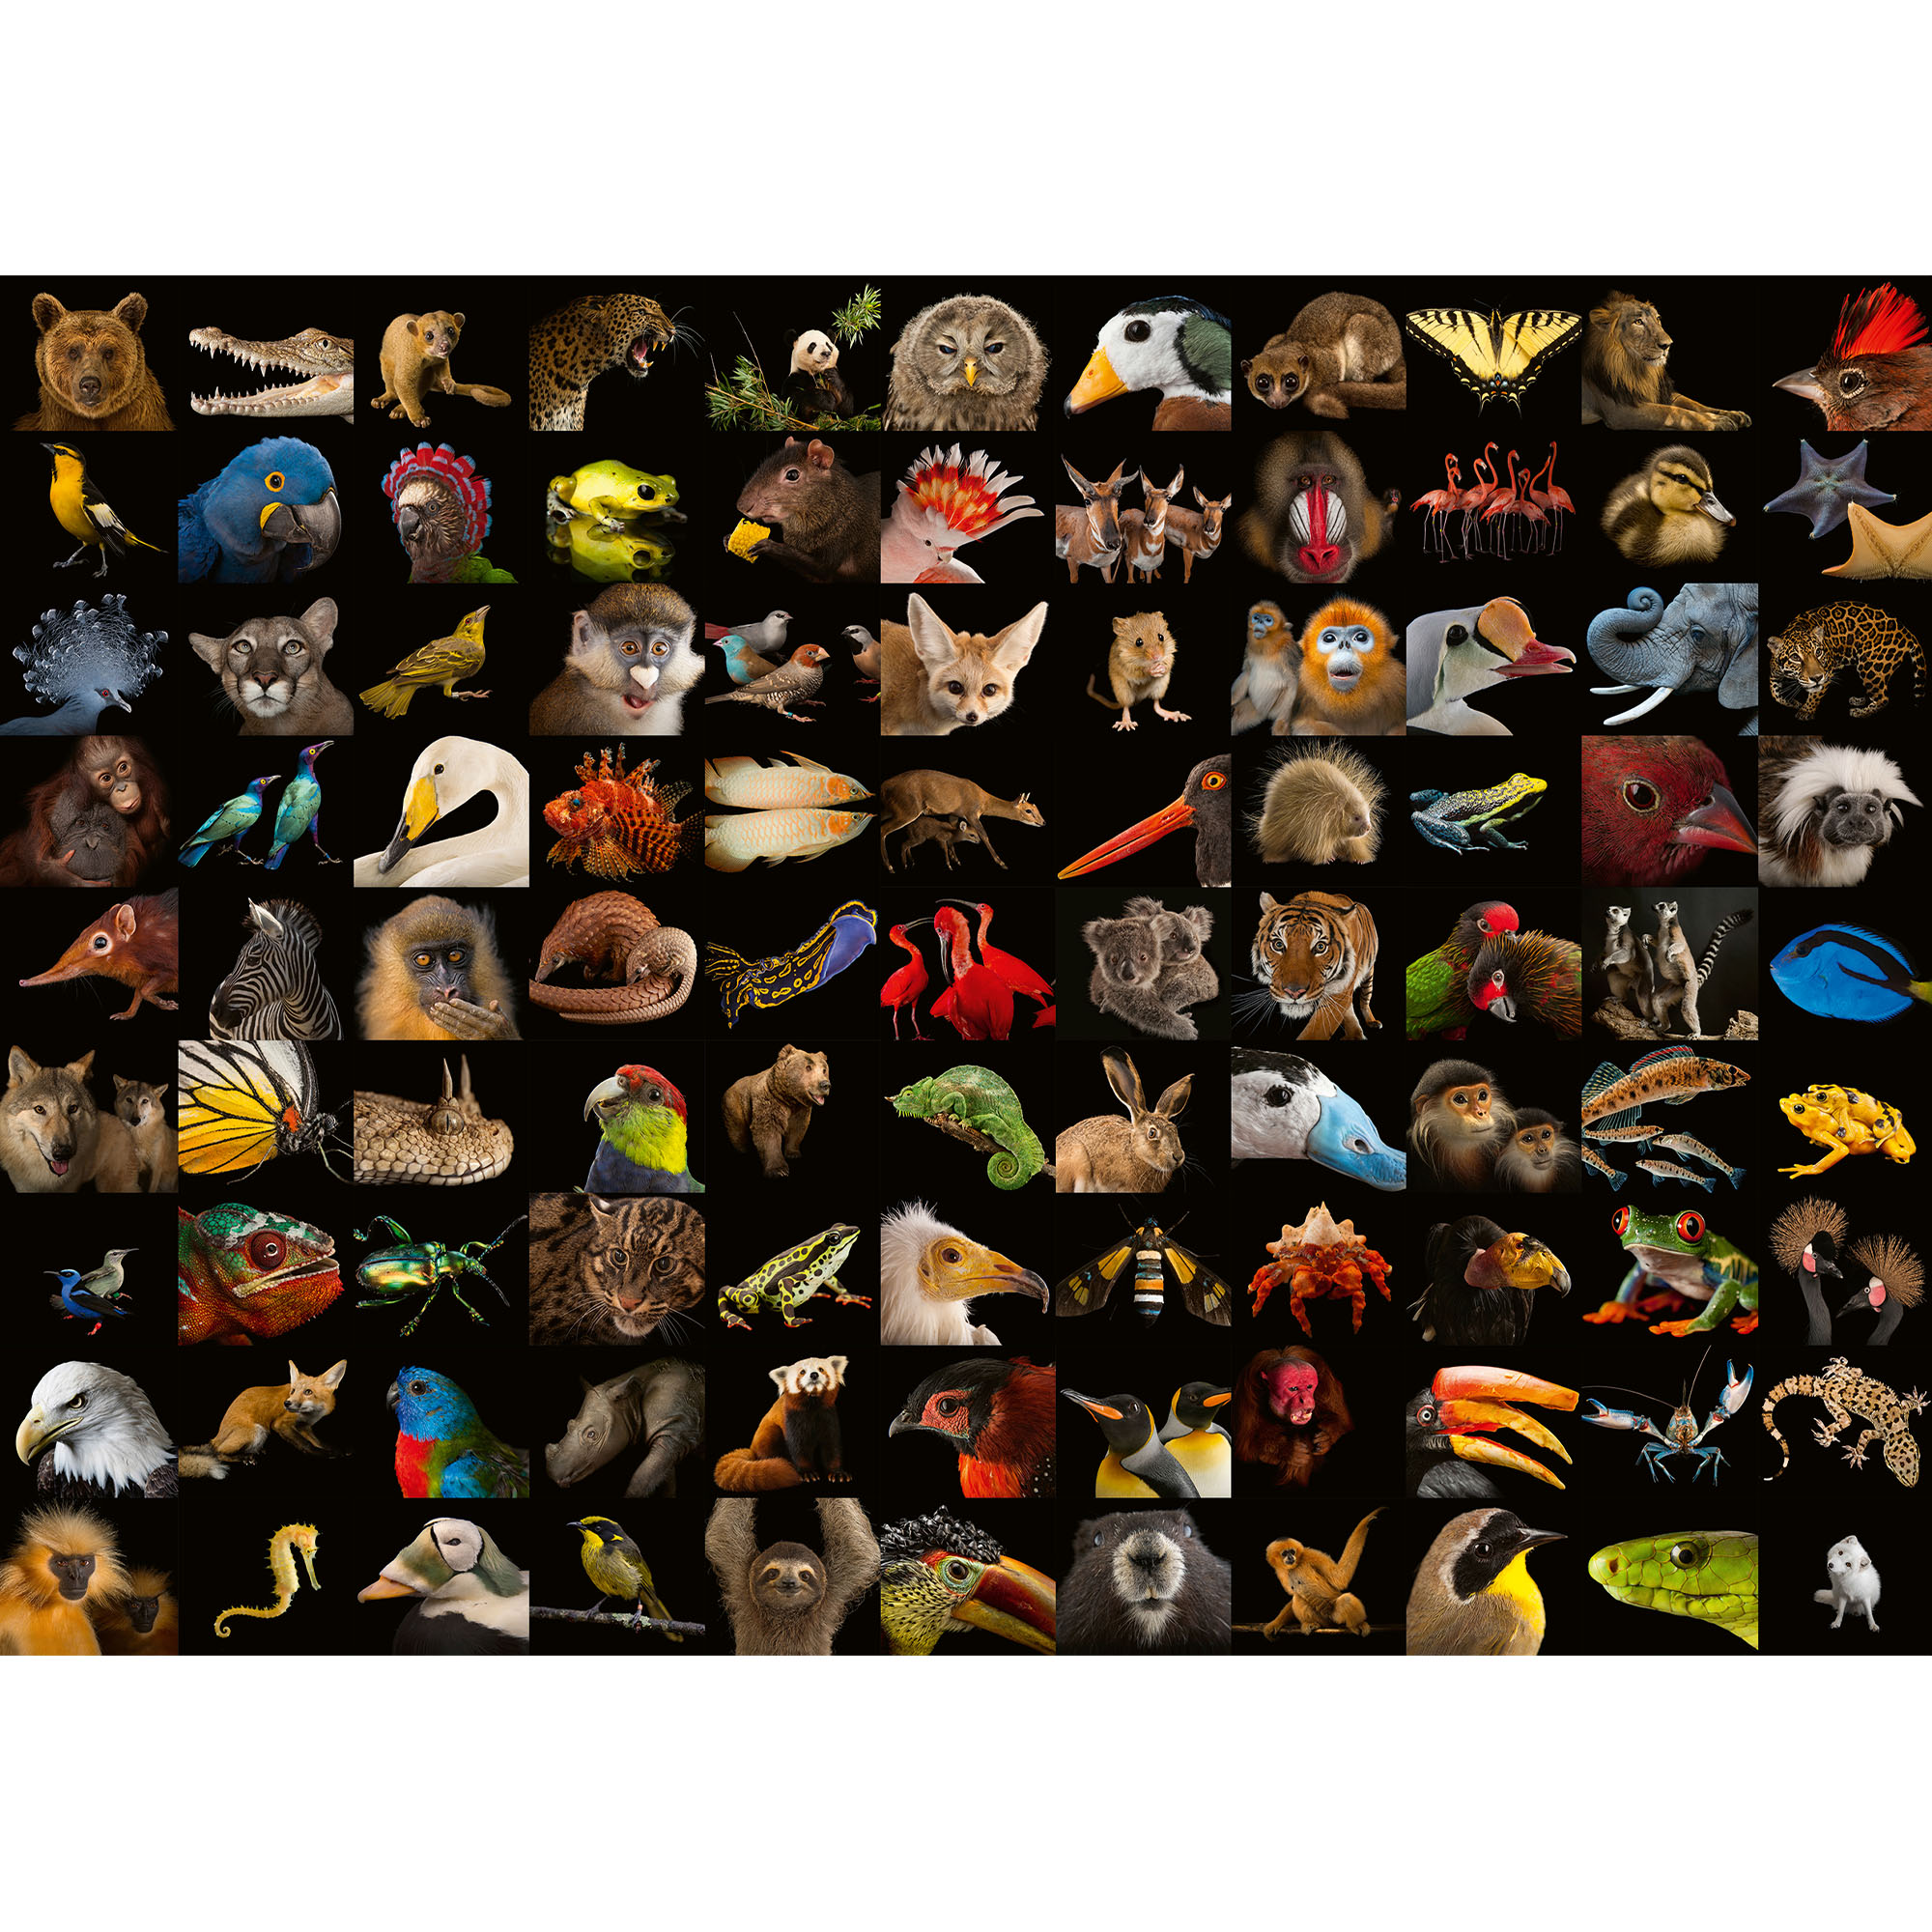 Ravensburger Puzzle 1000 pezzi 15983 - 99 Splendidi animali, , large